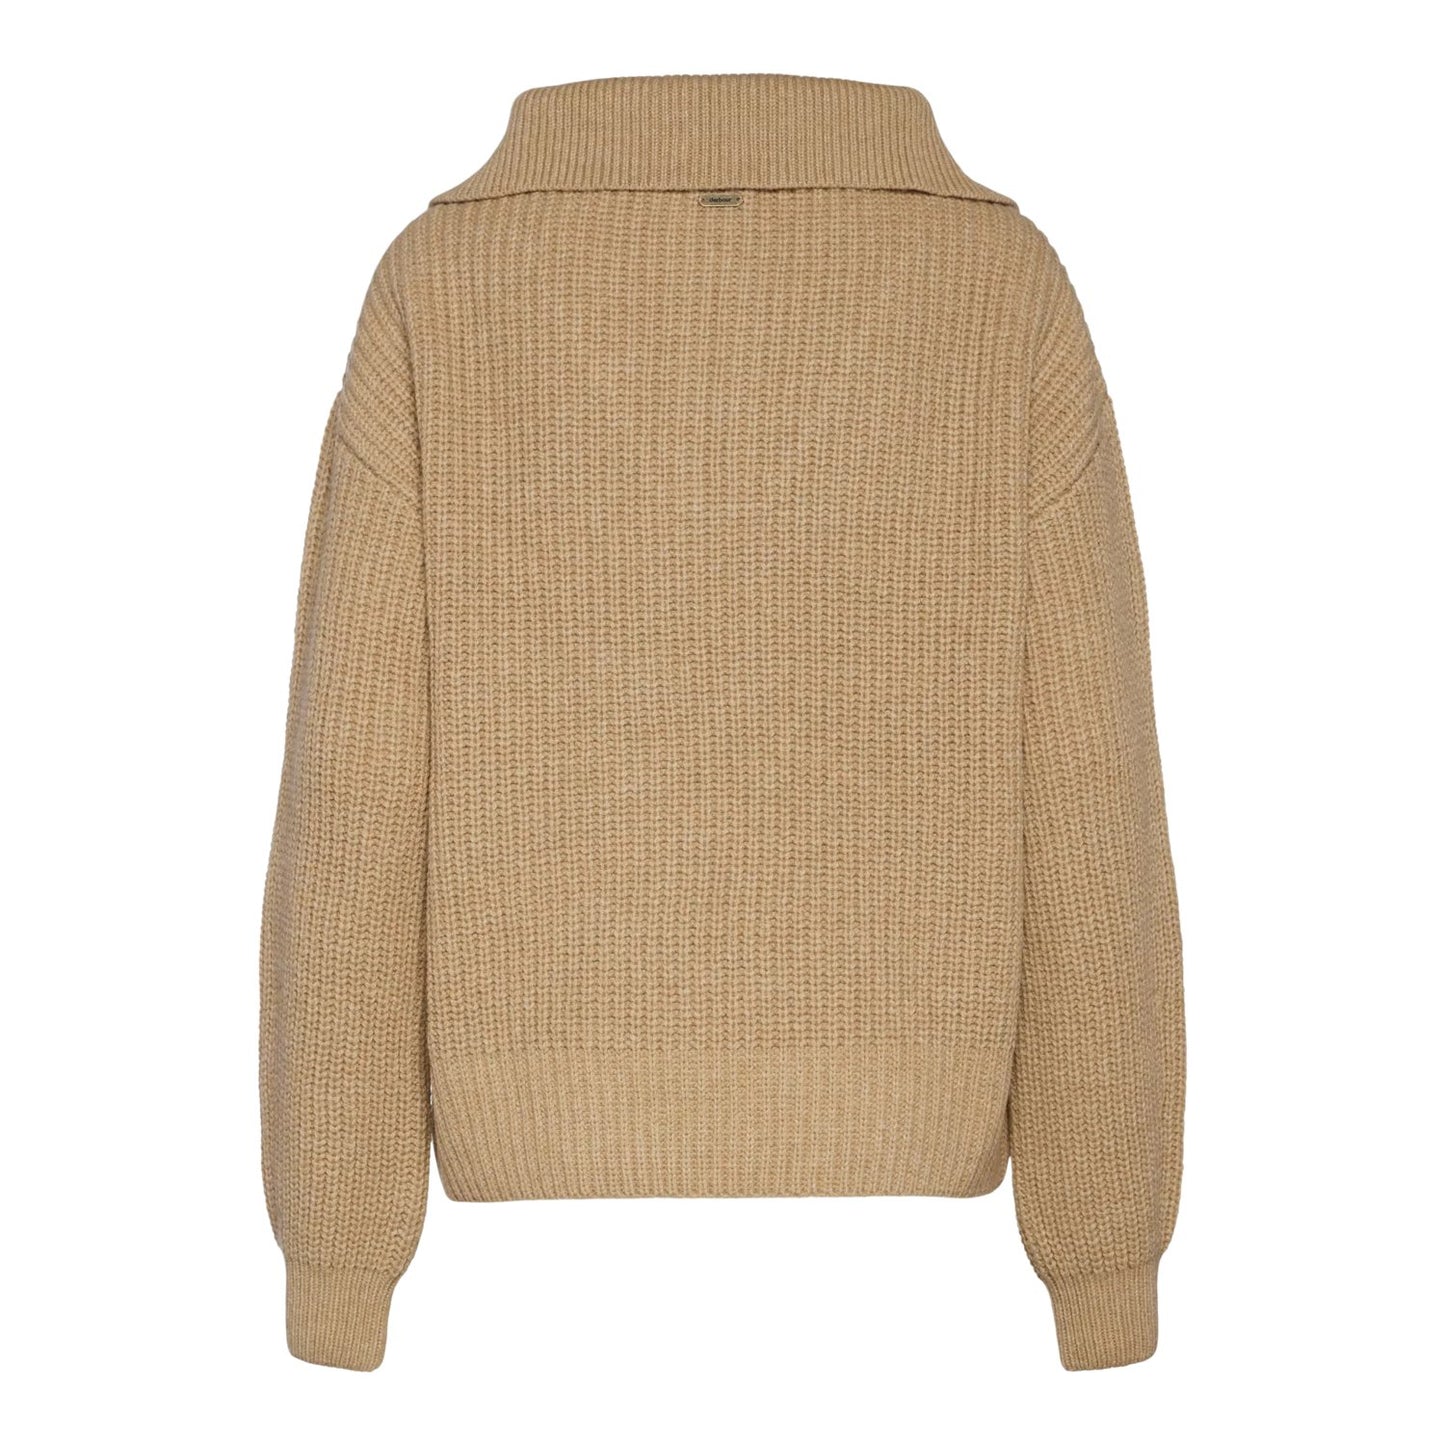 Stavia Wool Blend Sweater